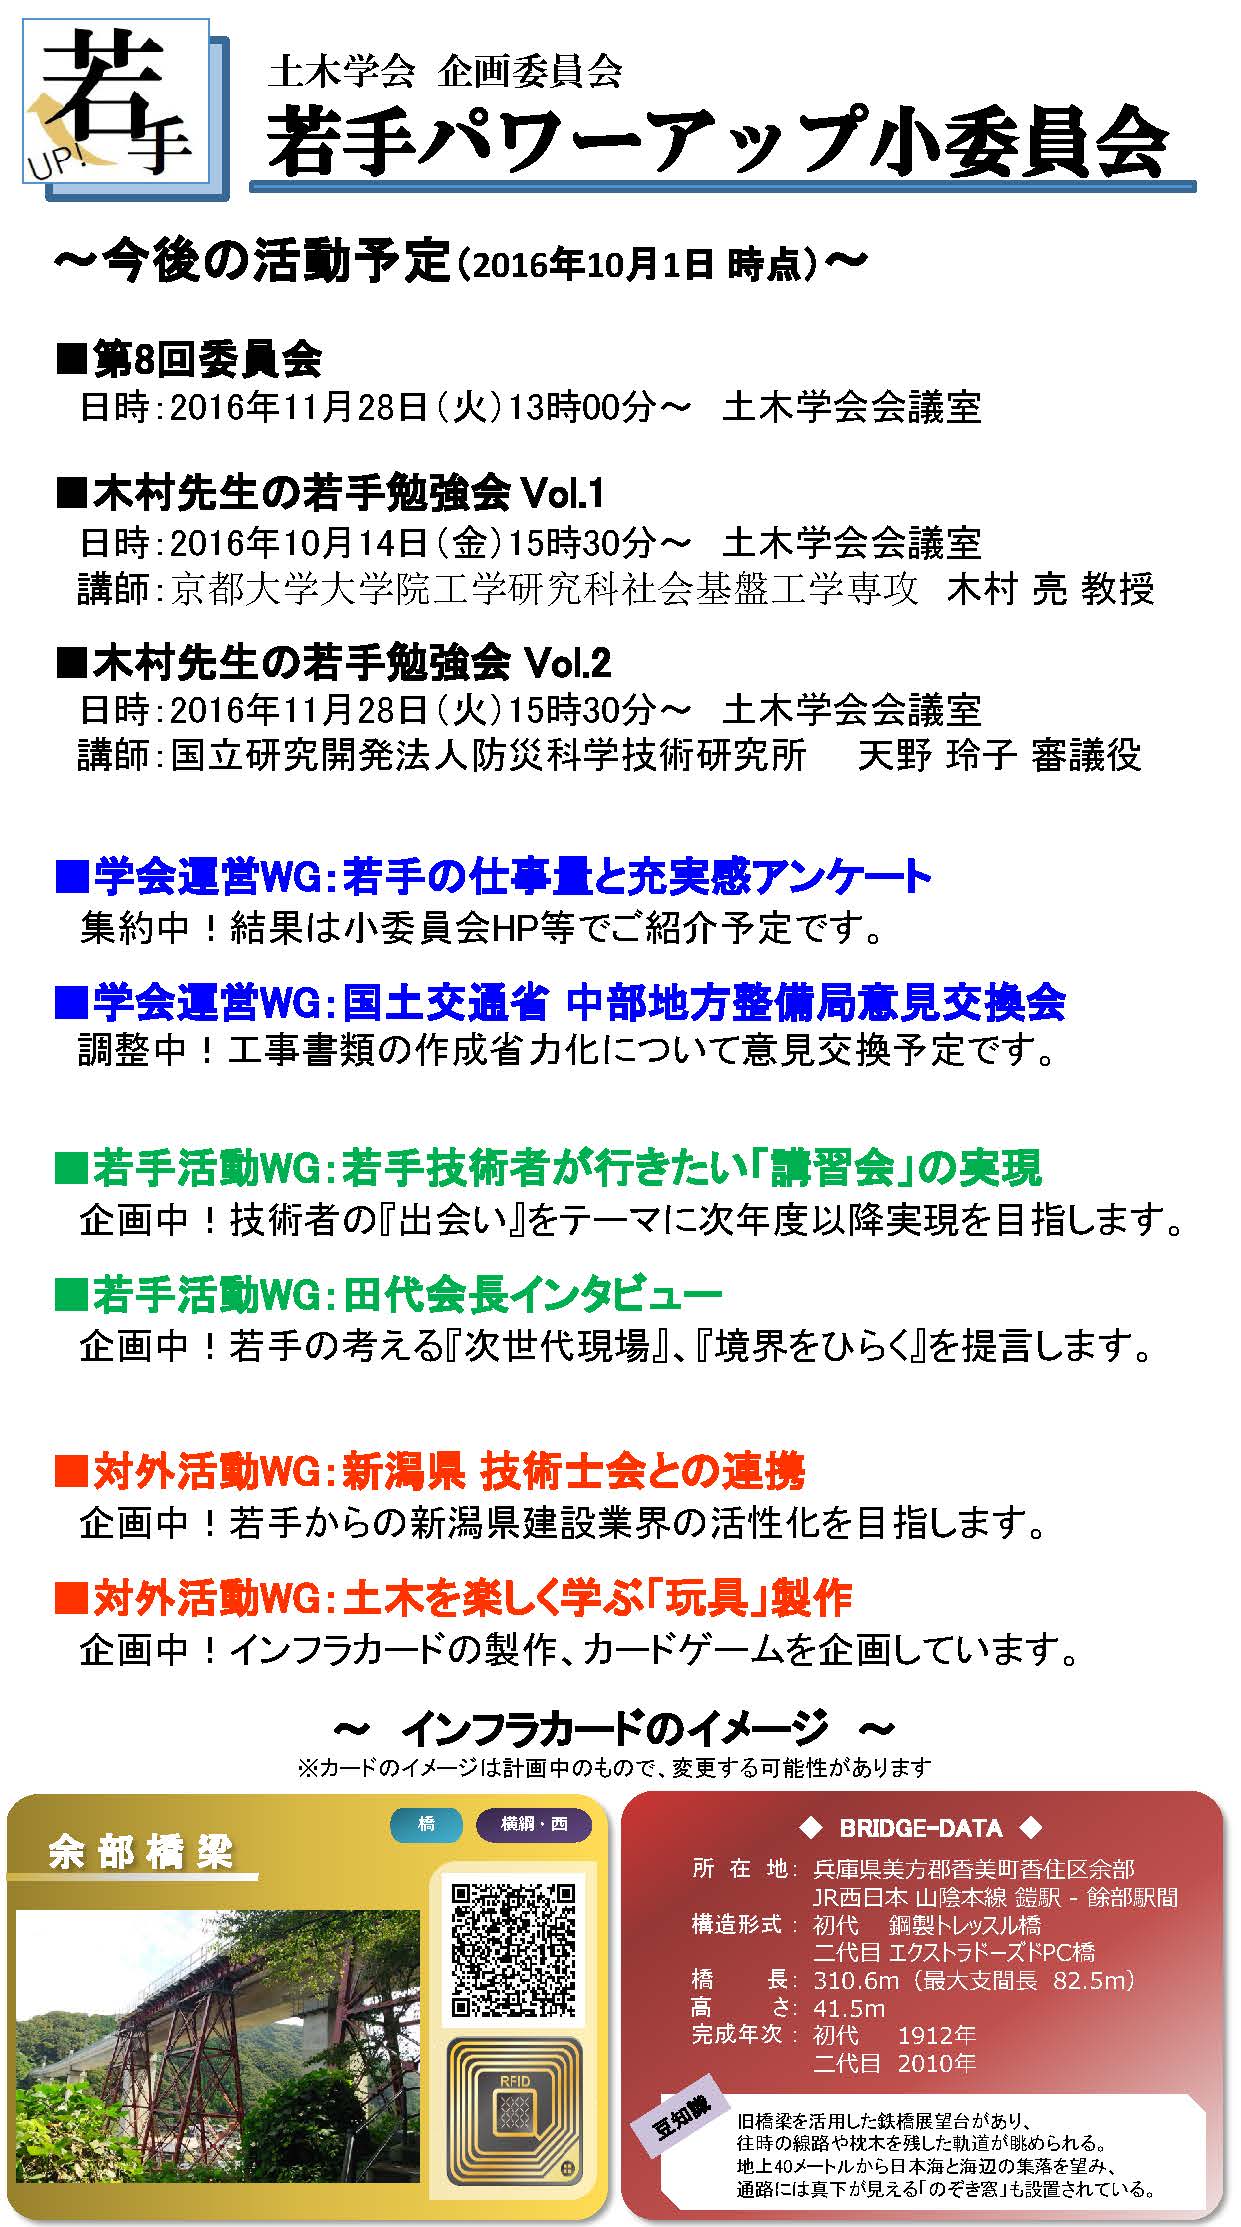 http://committees.jsce.or.jp/kikaku03/system/files/wakateactivity-2_0.jpg 